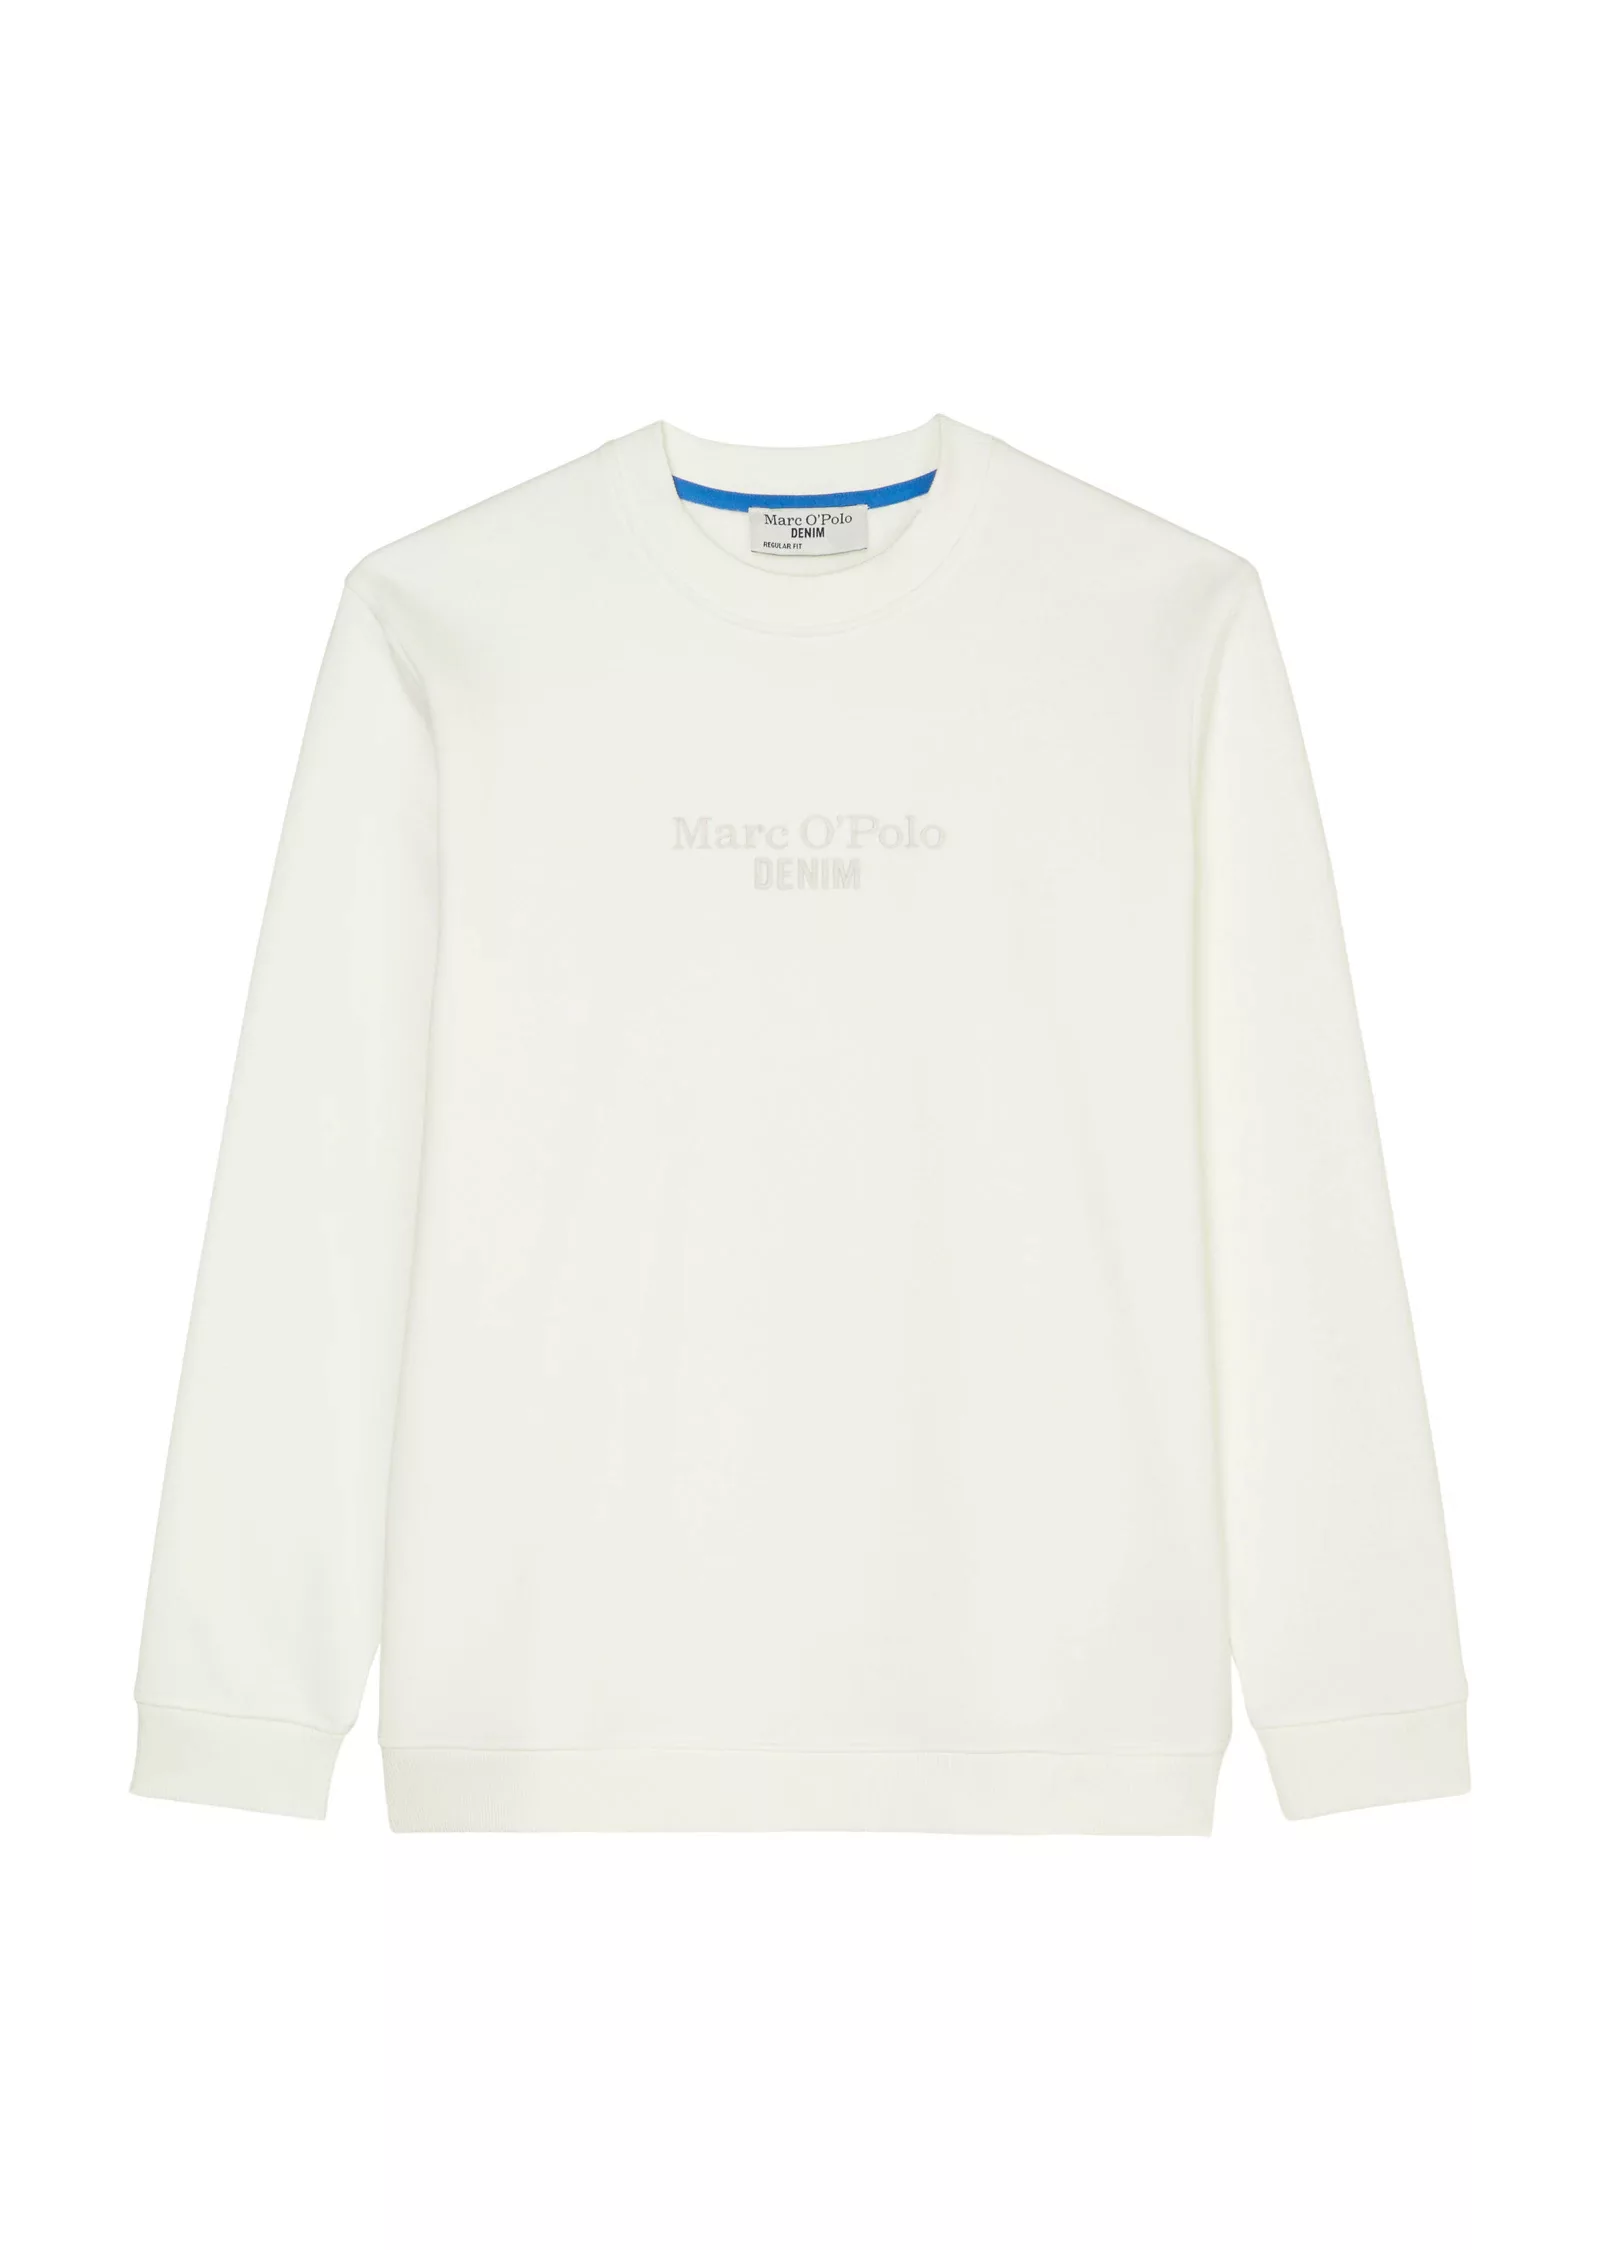 Marc O'Polo DENIM Sweatshirt günstig online kaufen